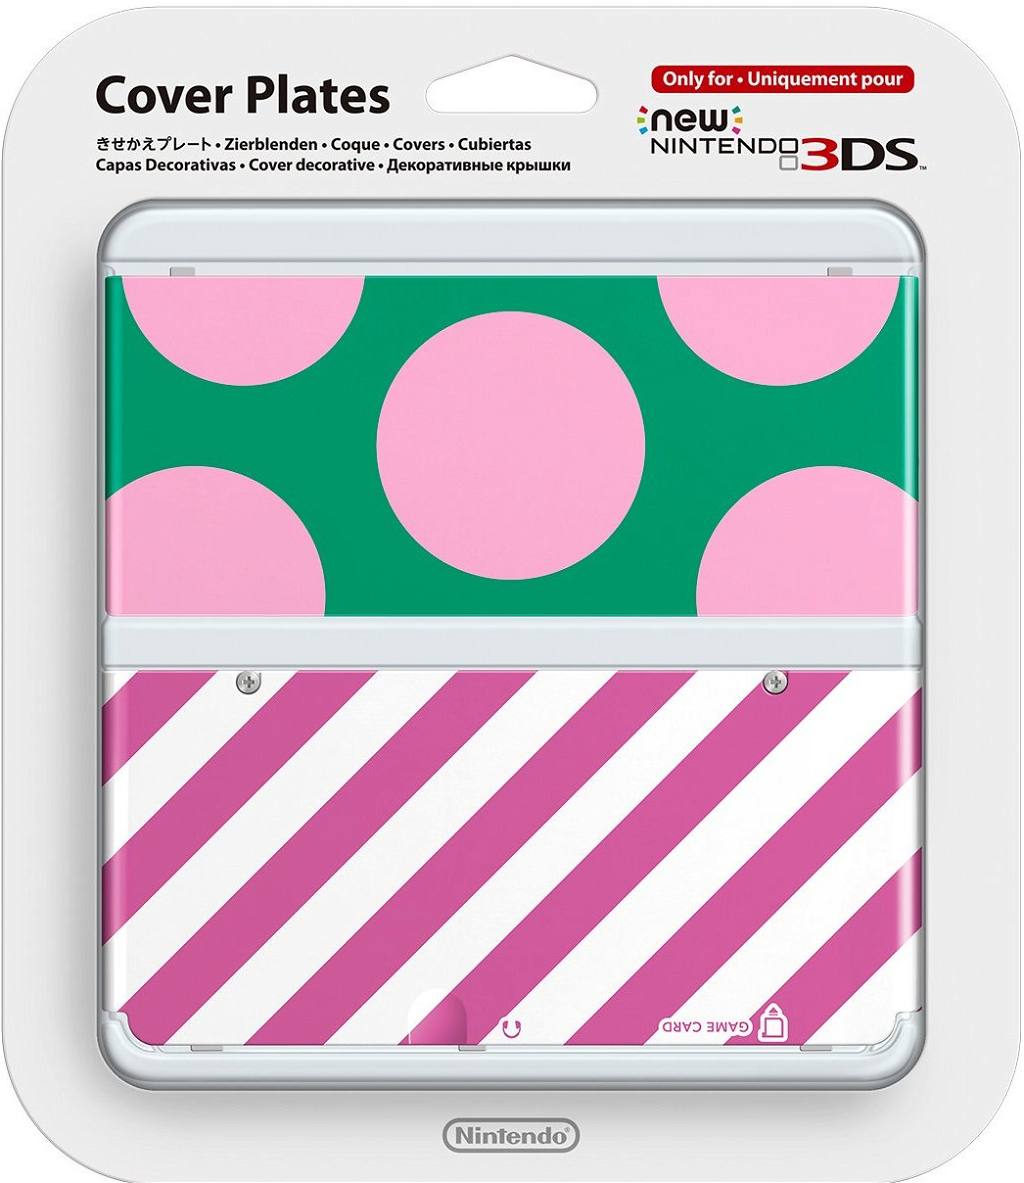 Tarif forbrug apt New Nintendo 3DS Cover Plates No.017 for New Nintendo 3DS